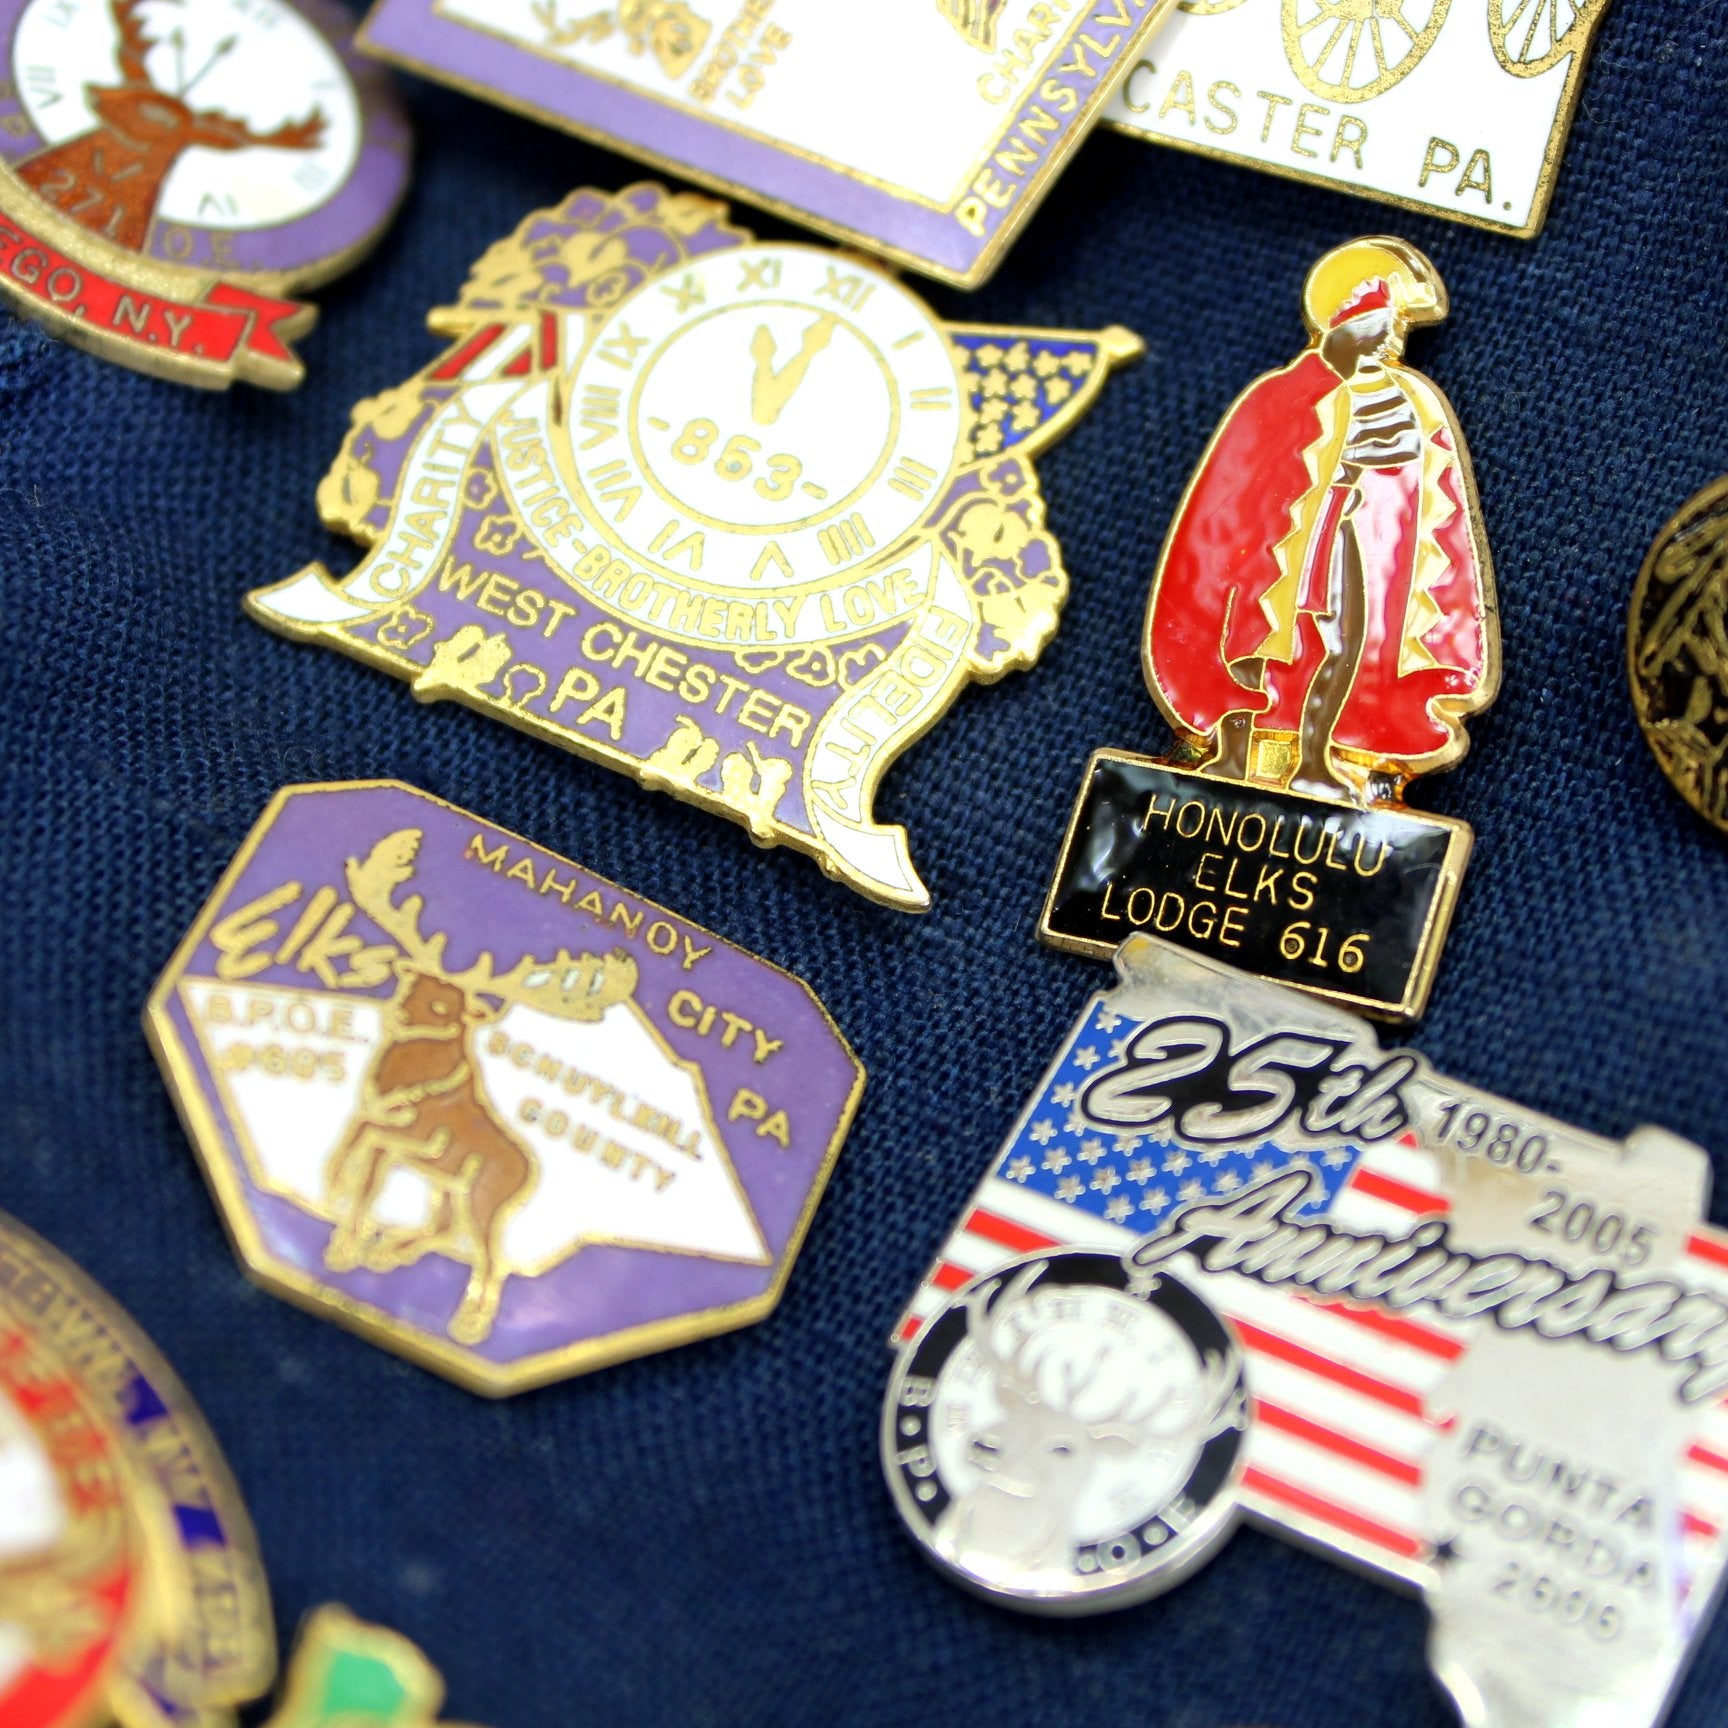 BPOE Elks Collectible Vest 240+ Unique Pins Medals Elks Memorabilia Most States Pins honolulu elks 616 mahandy city PA